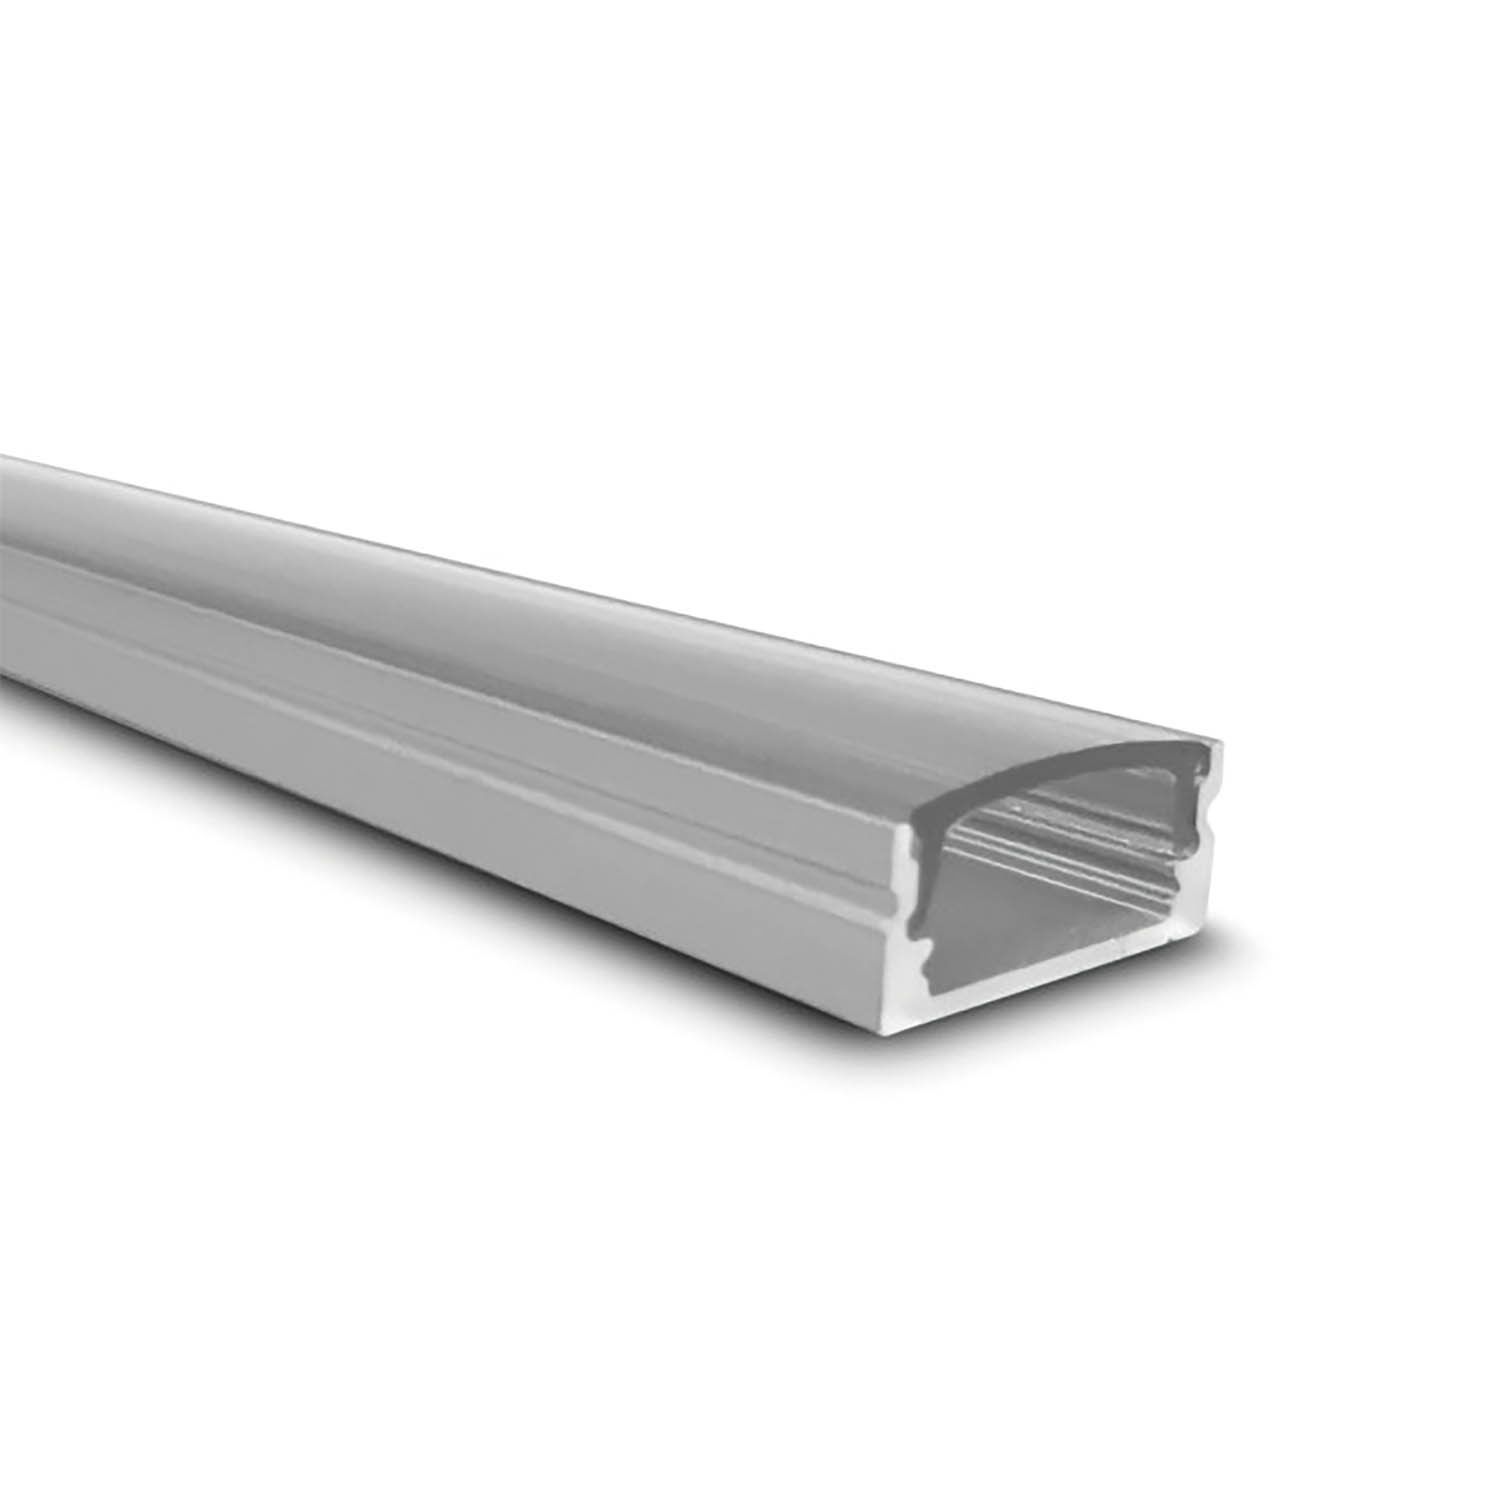 Perfil Aluminio Para Tira Led Superficie C/Tapa Transparente 17x7mm